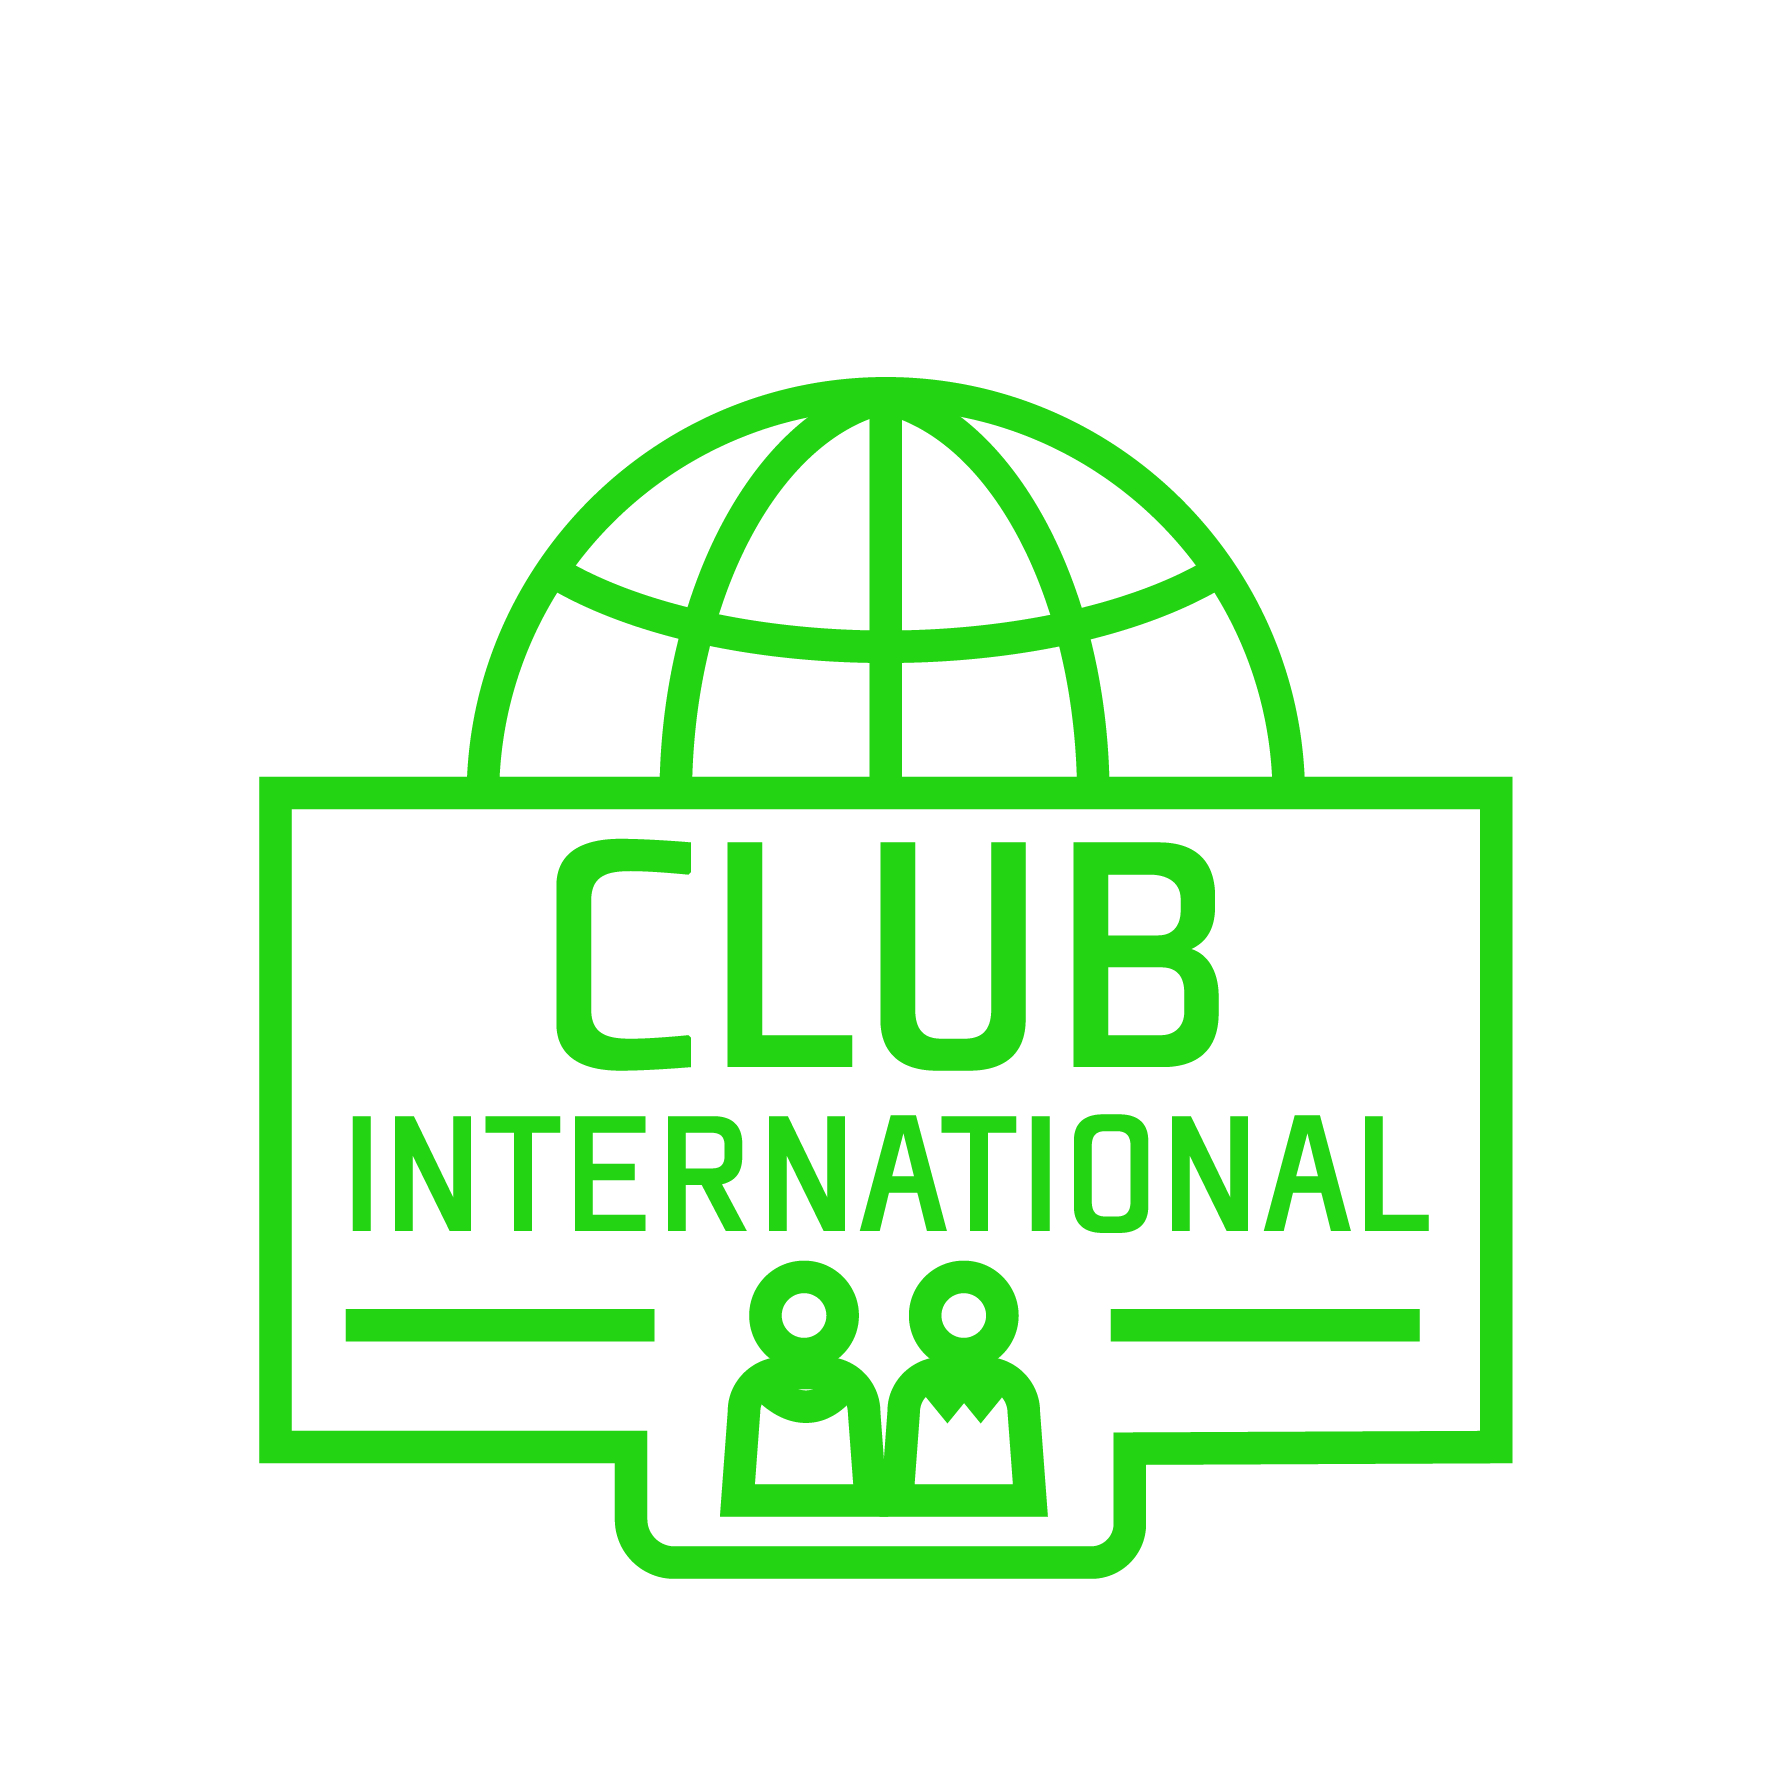 International Club SPACE 2019